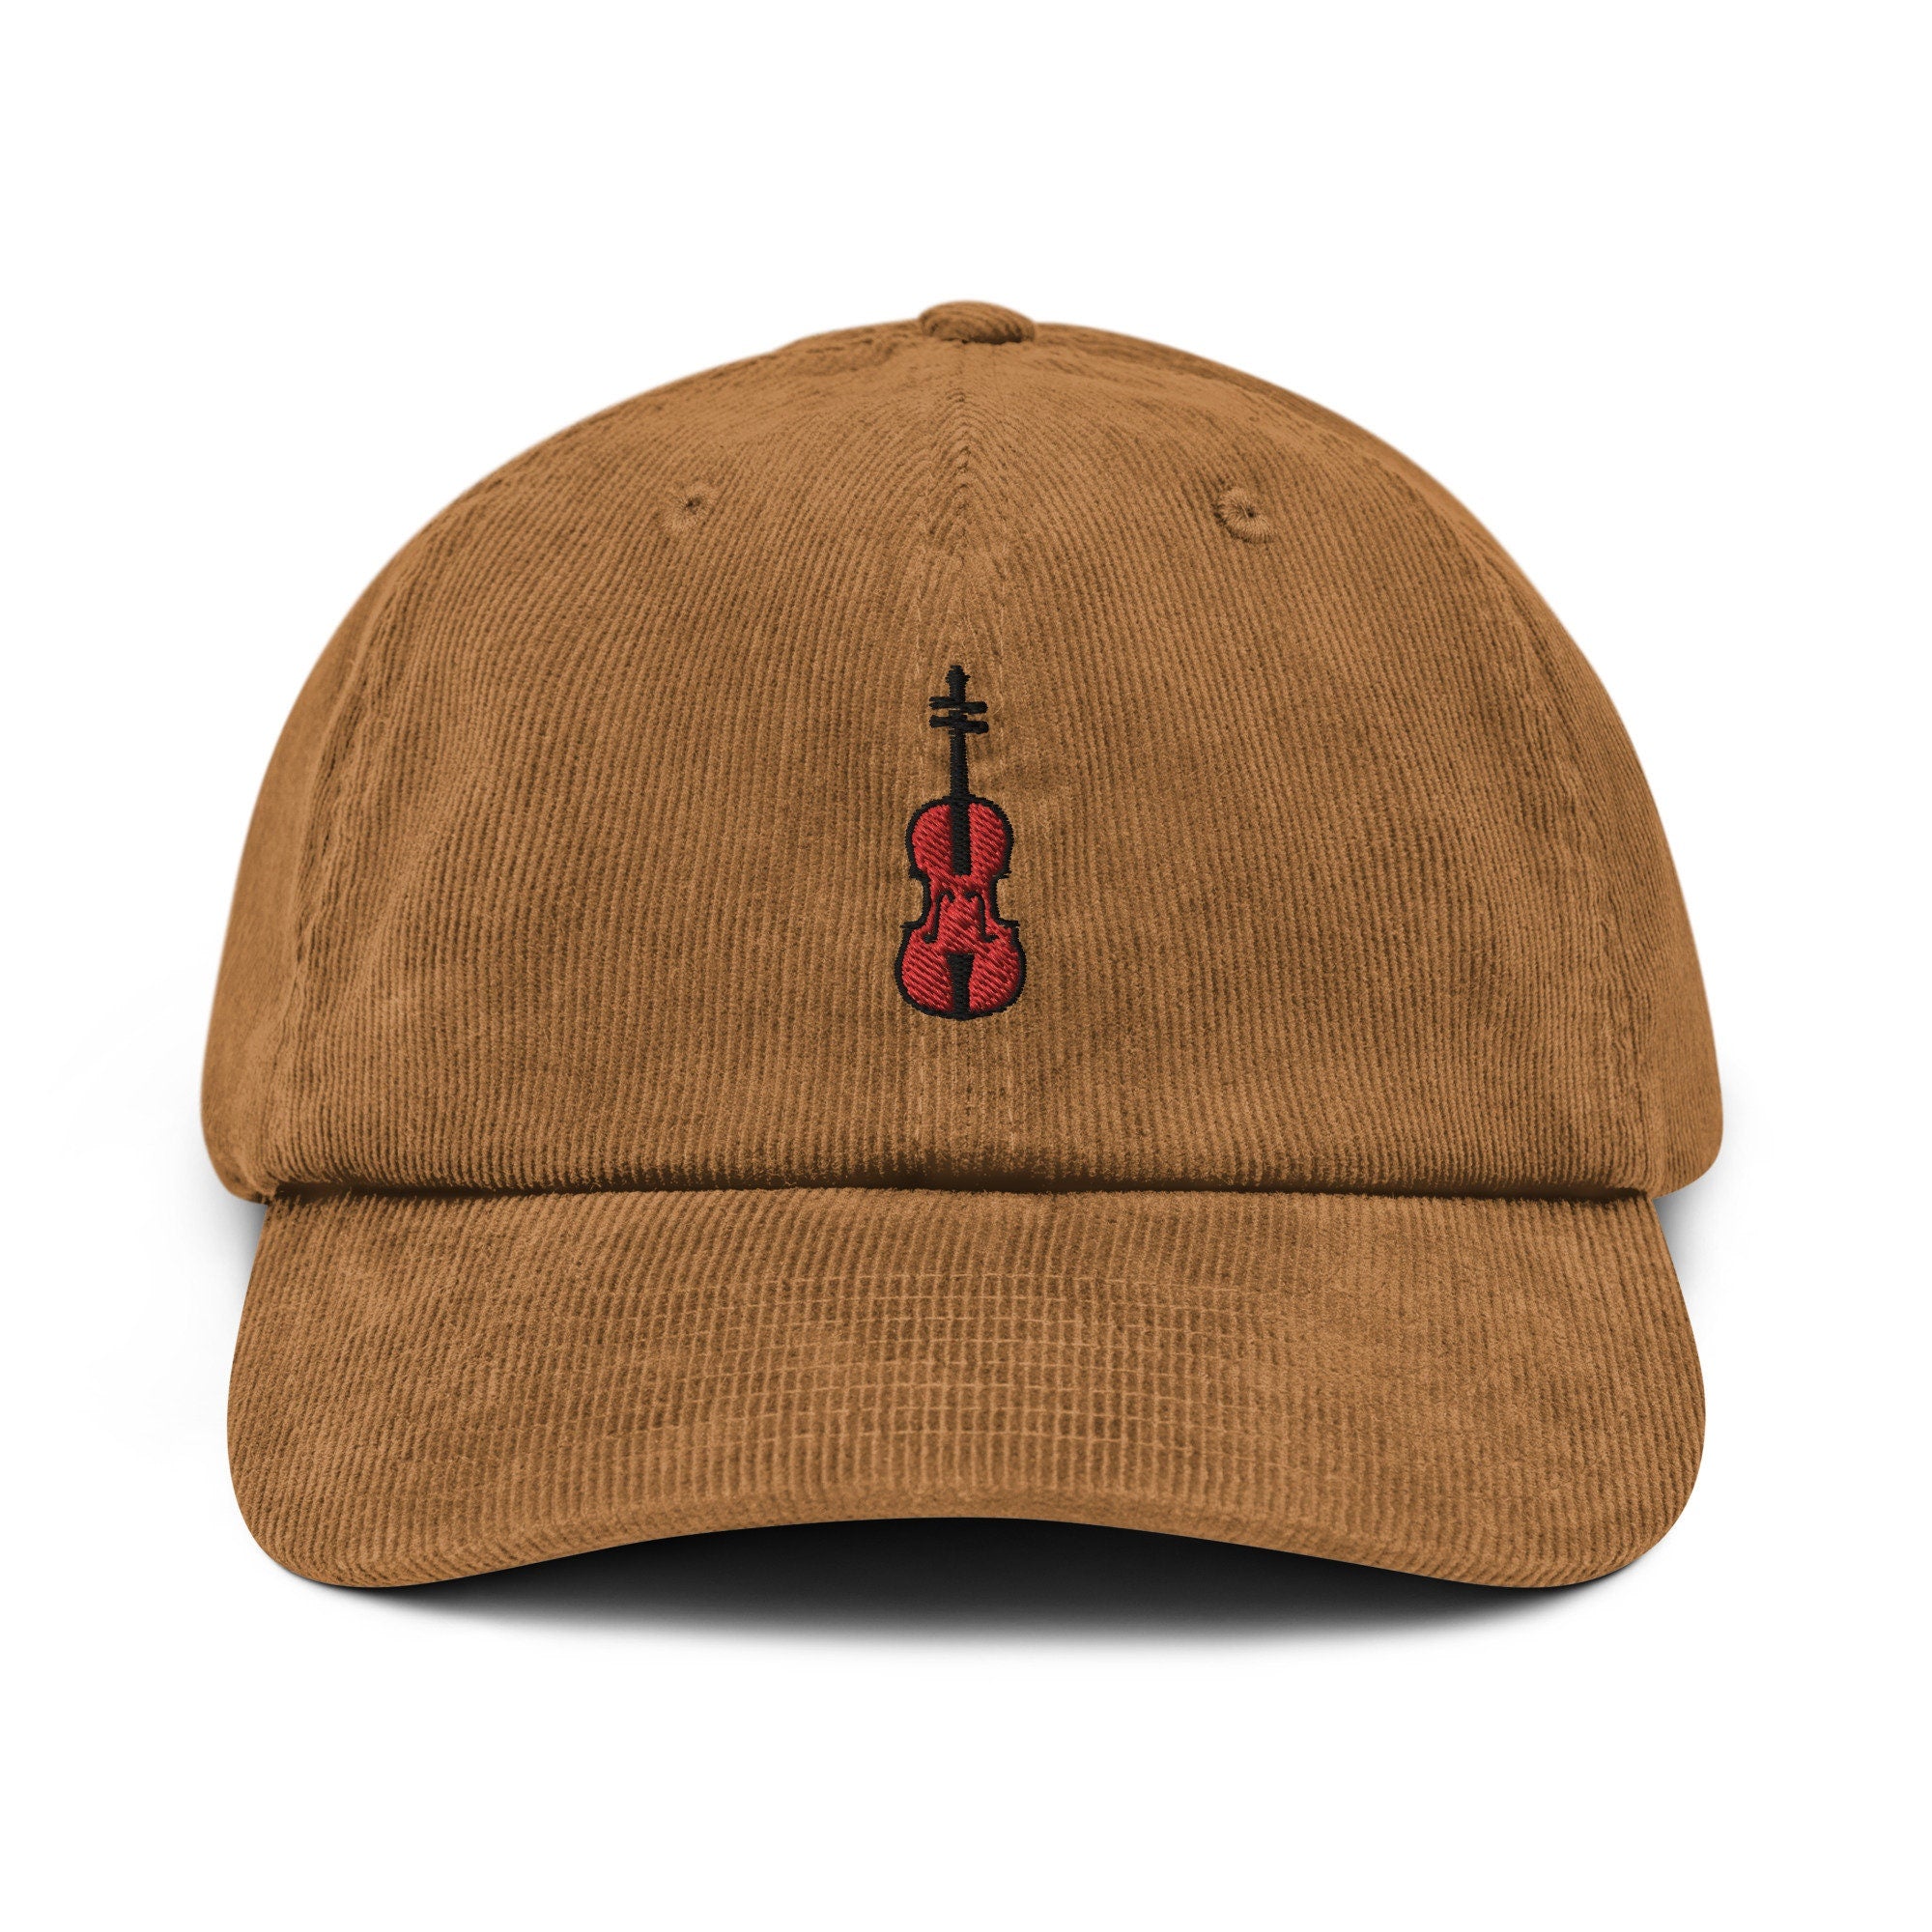 Violin Corduroy Hat, Handmade Embroidered Corduroy Dad Cap - Multiple Colors